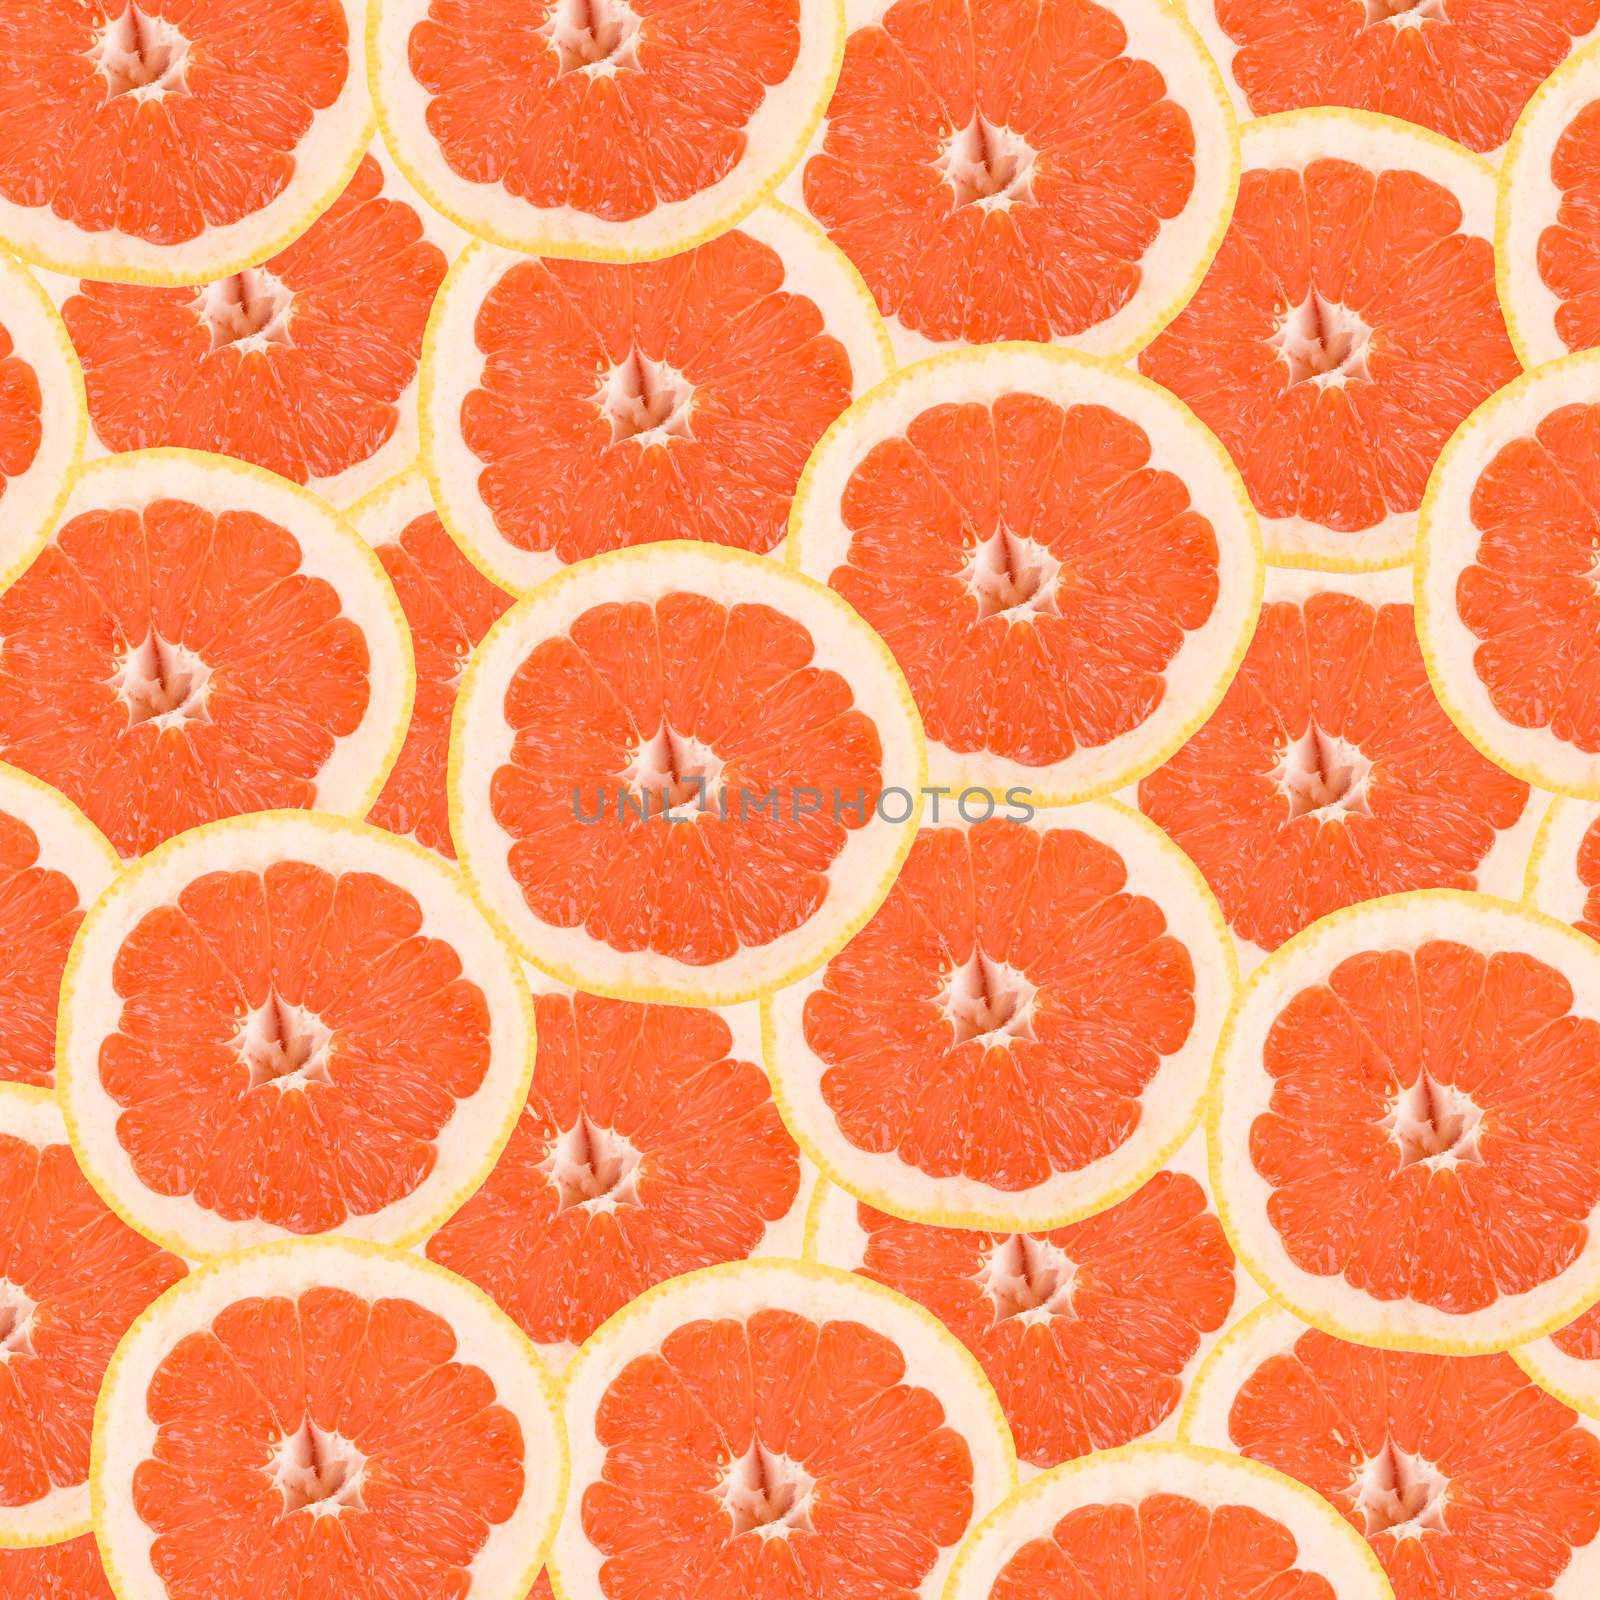 grapefruits background by Alekcey